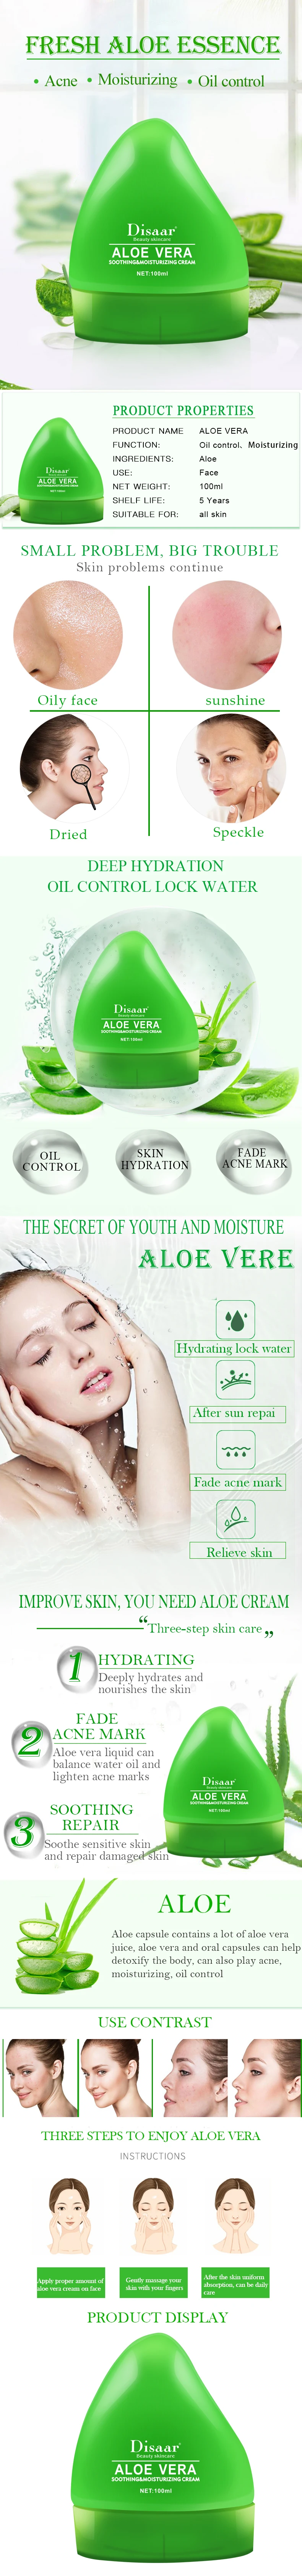 Pure Aloe Vera Moisturizing Organic Anti Aging Whitening Repair Face Cream Skin Care Cream For Day And Night